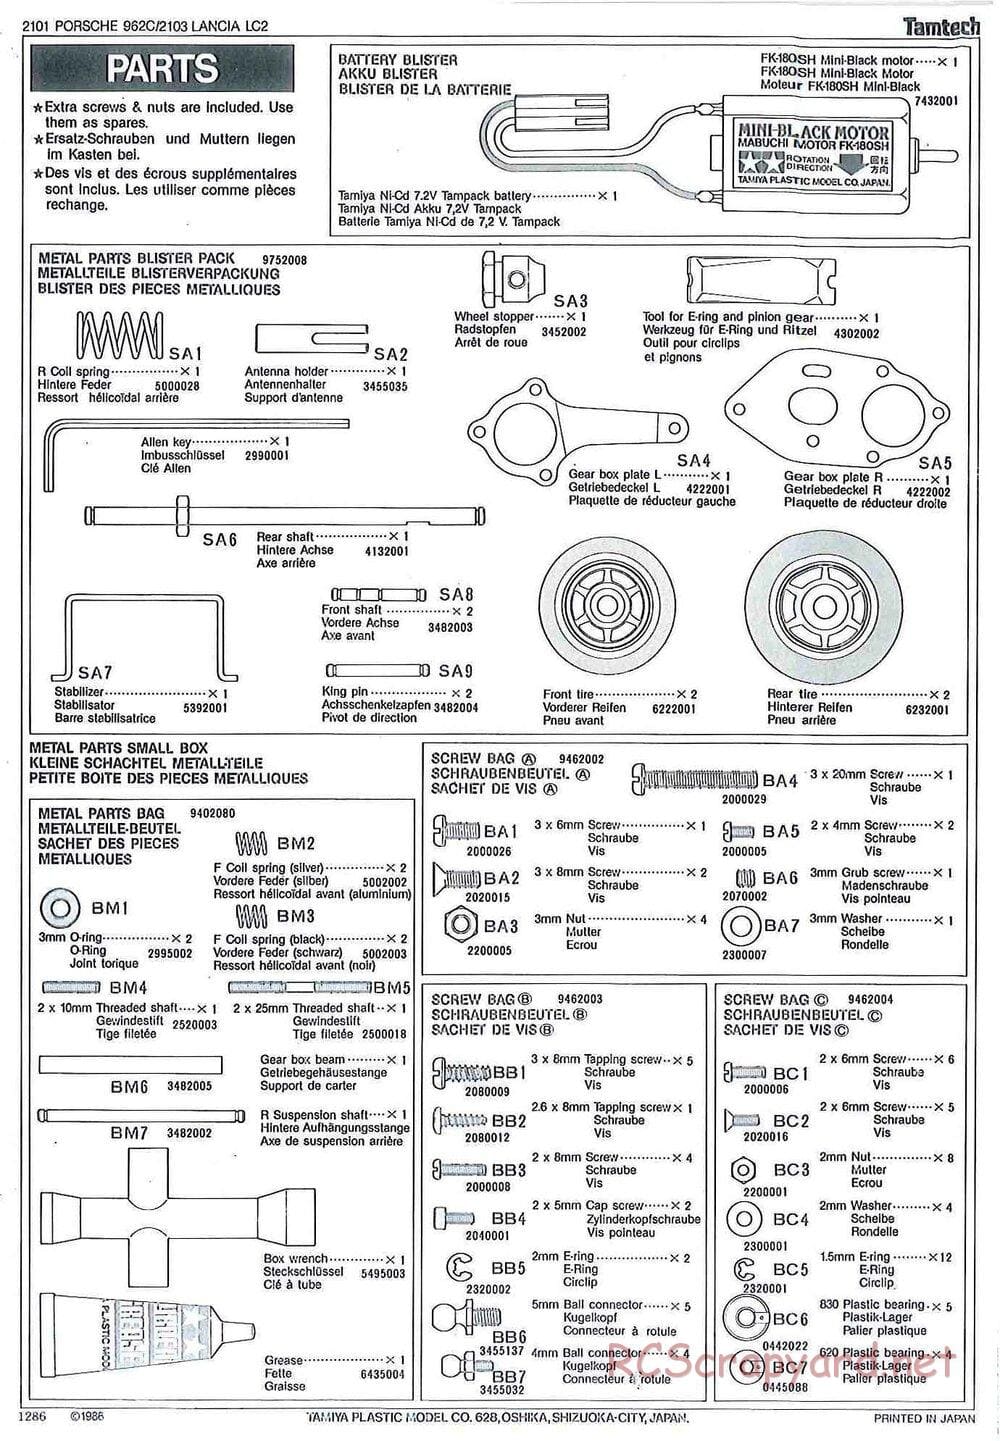 Tamiya - Tamtech - Ferrari 643 Chassis - Manual - Page 19